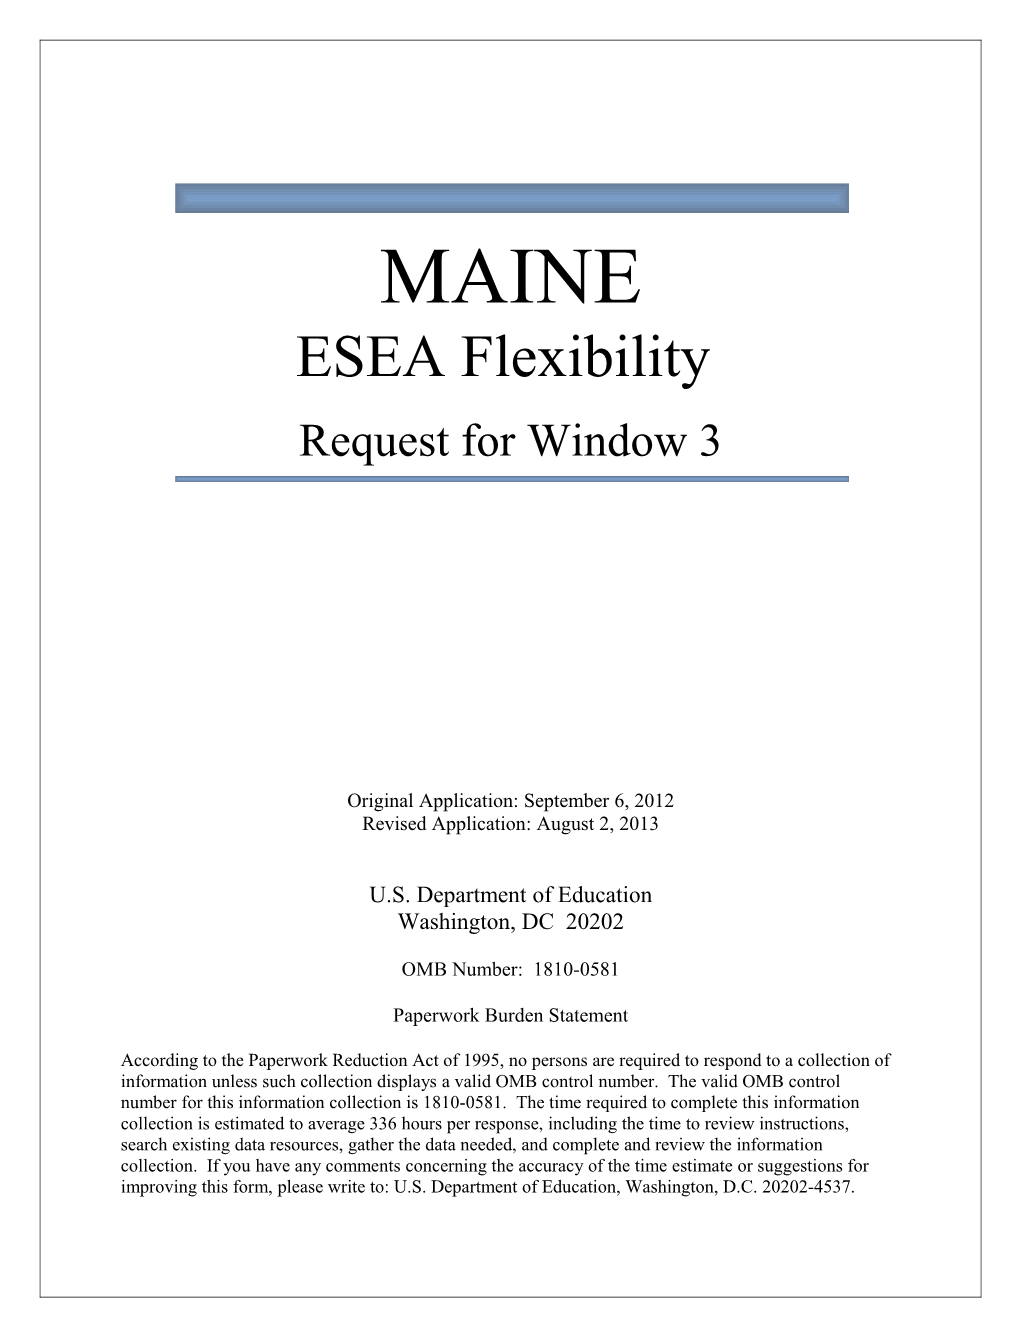 ESEA Flexibility Request June 2012 (Msword)